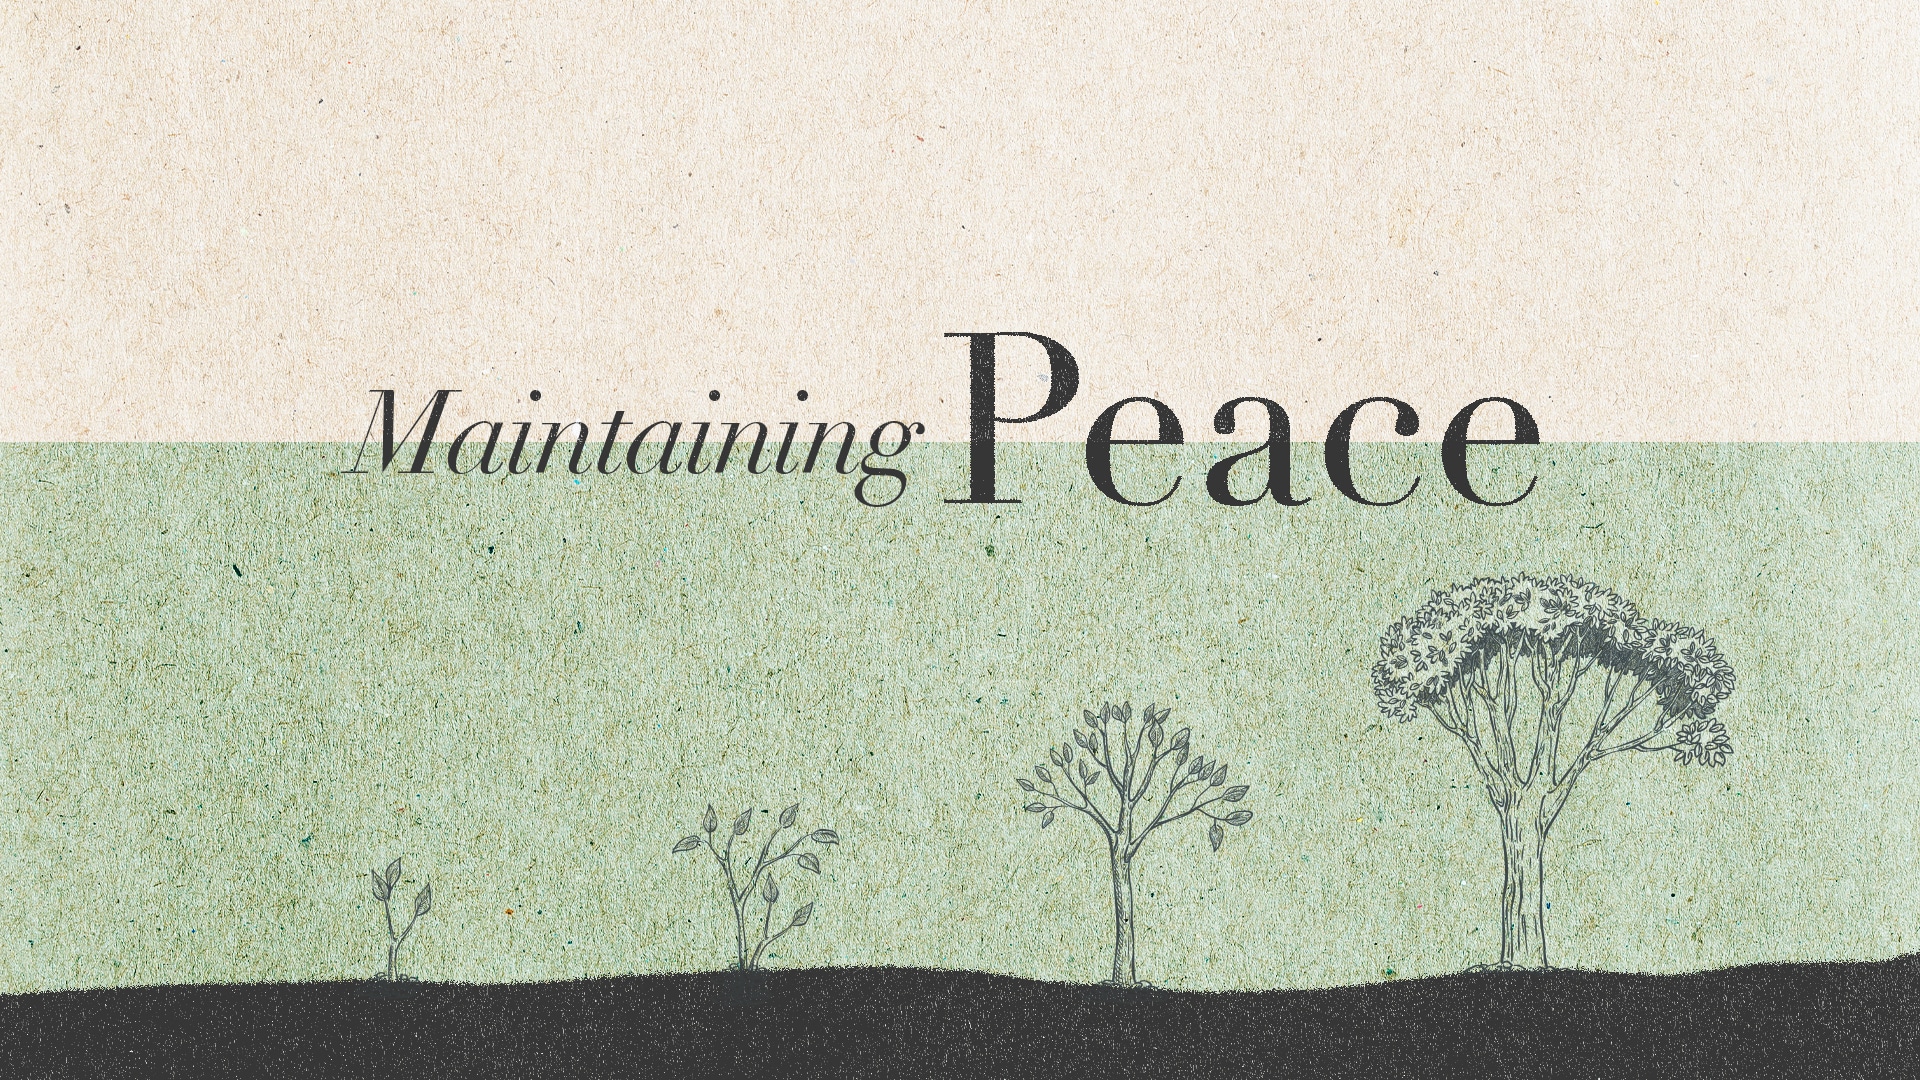 Brooklyn Tabernacle Maintaining peace thumbnail